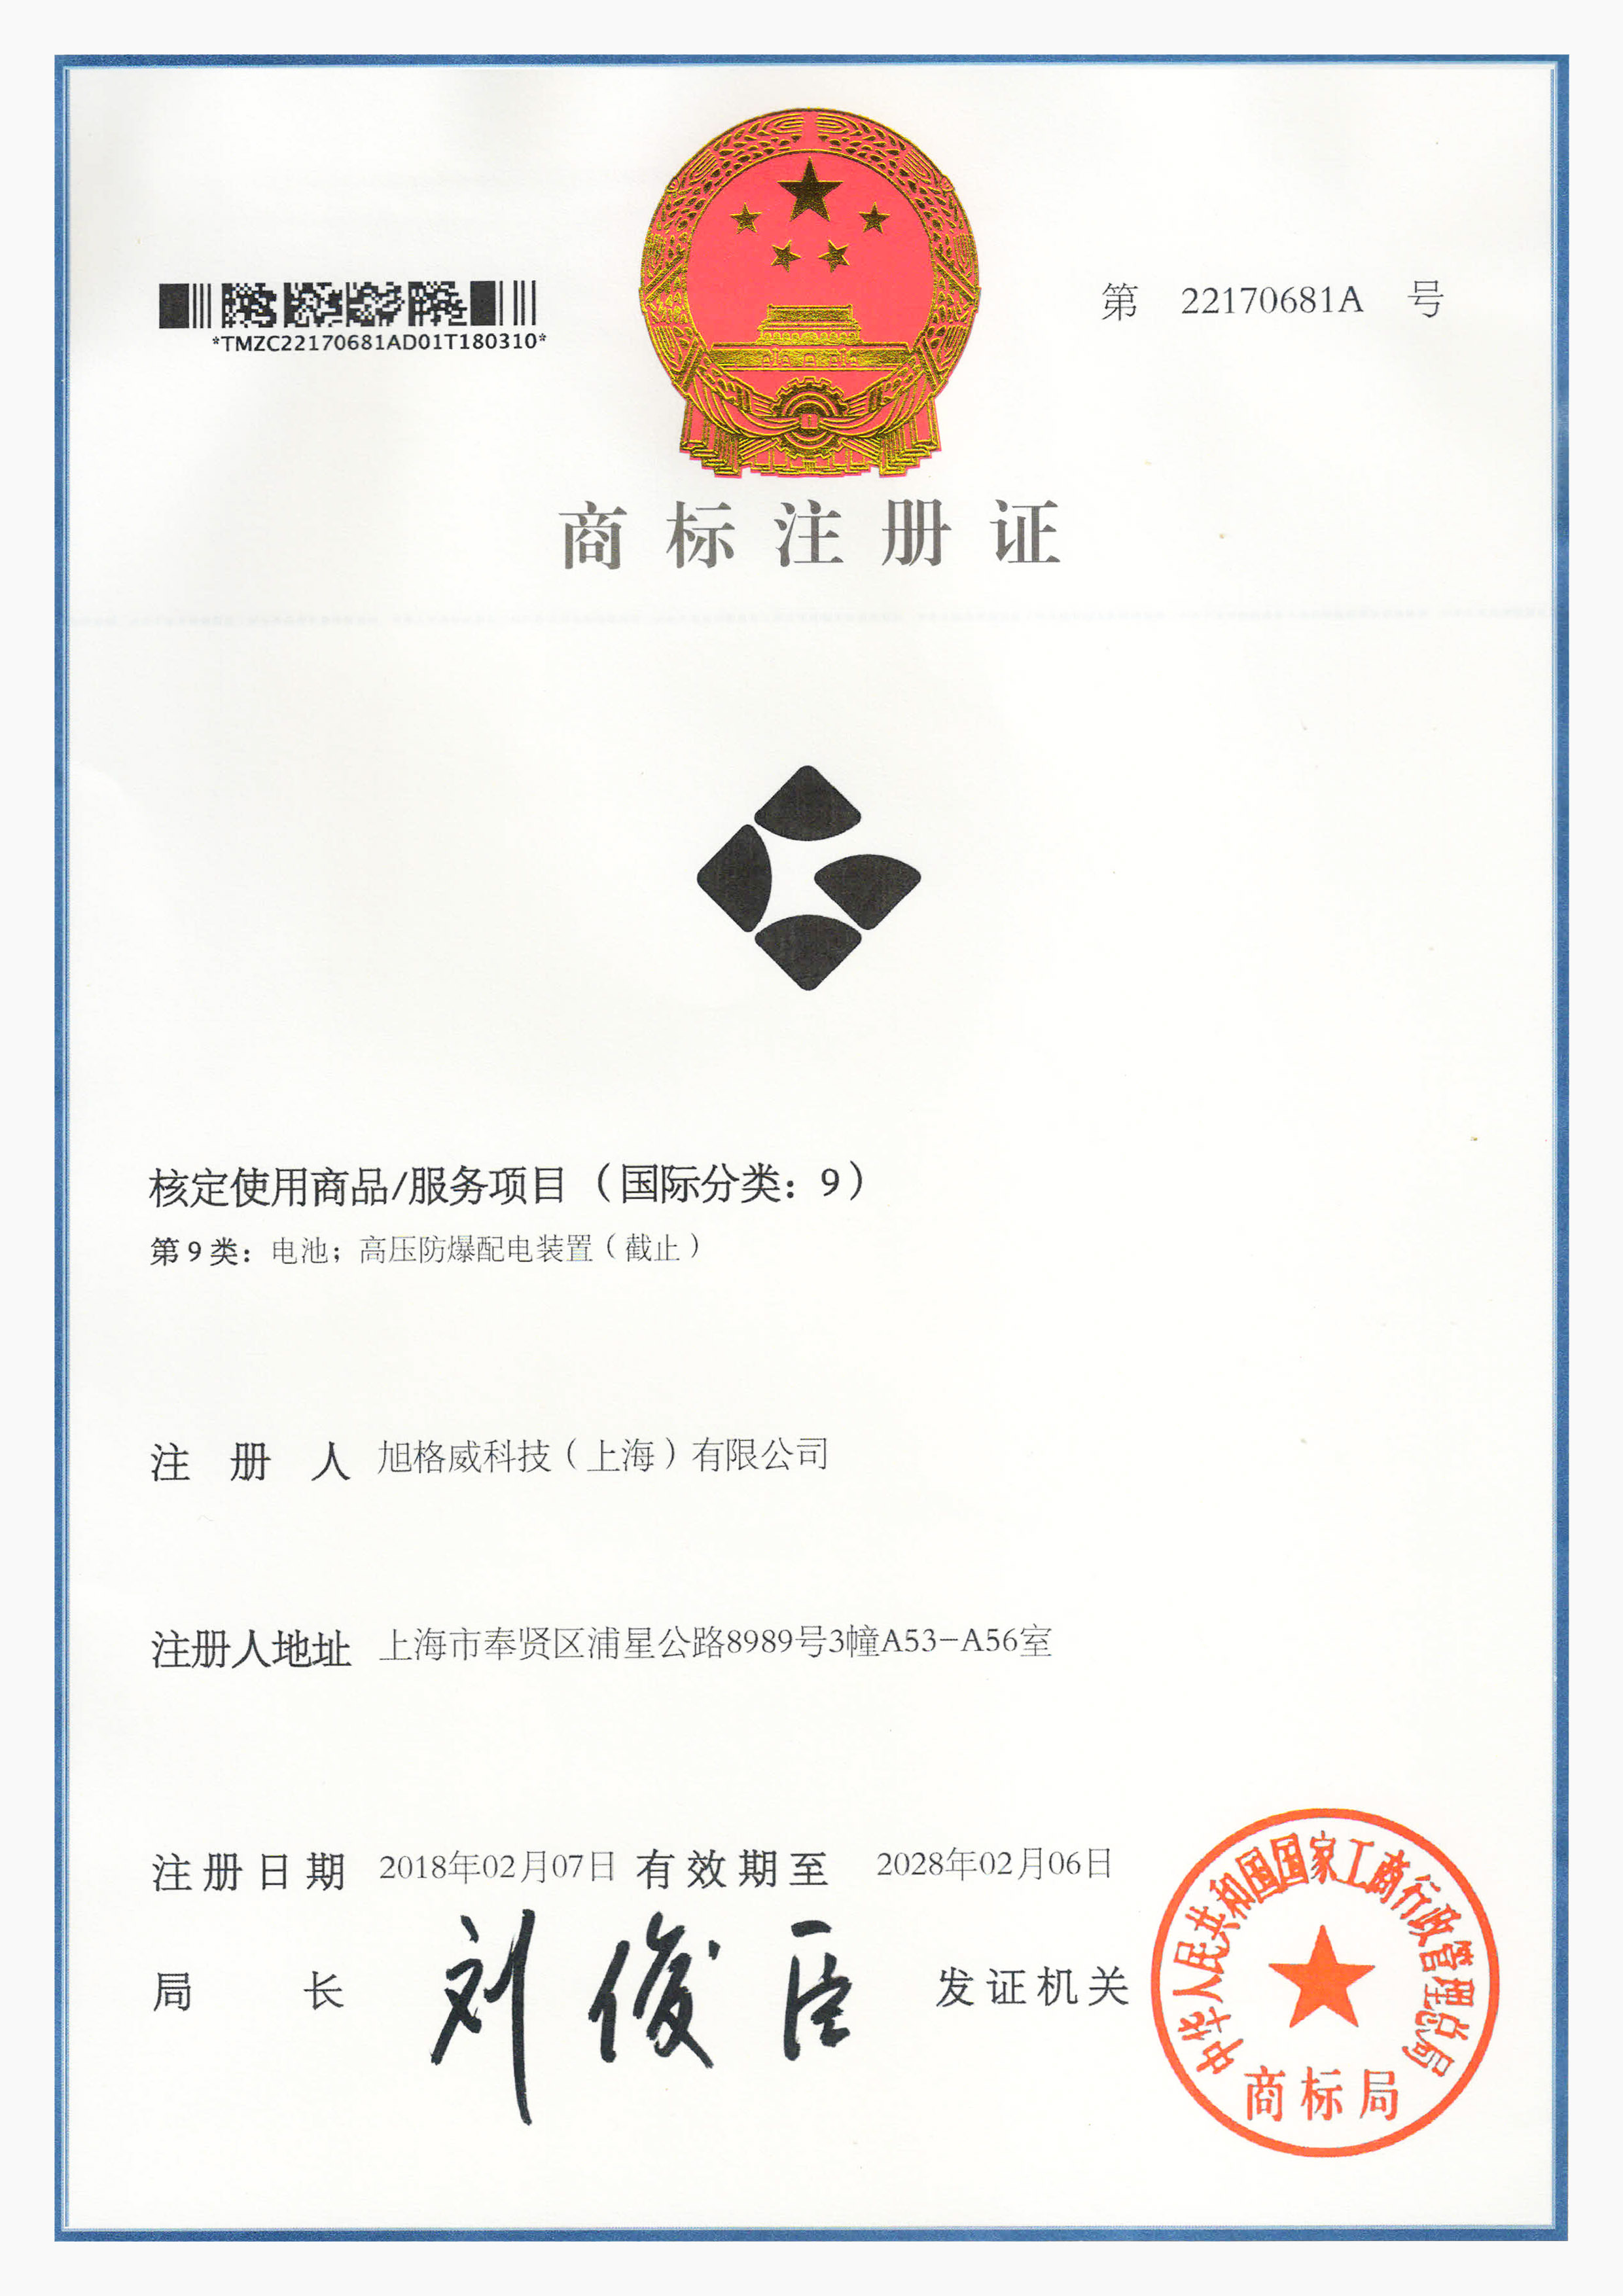 LOGO trademark registration certificate